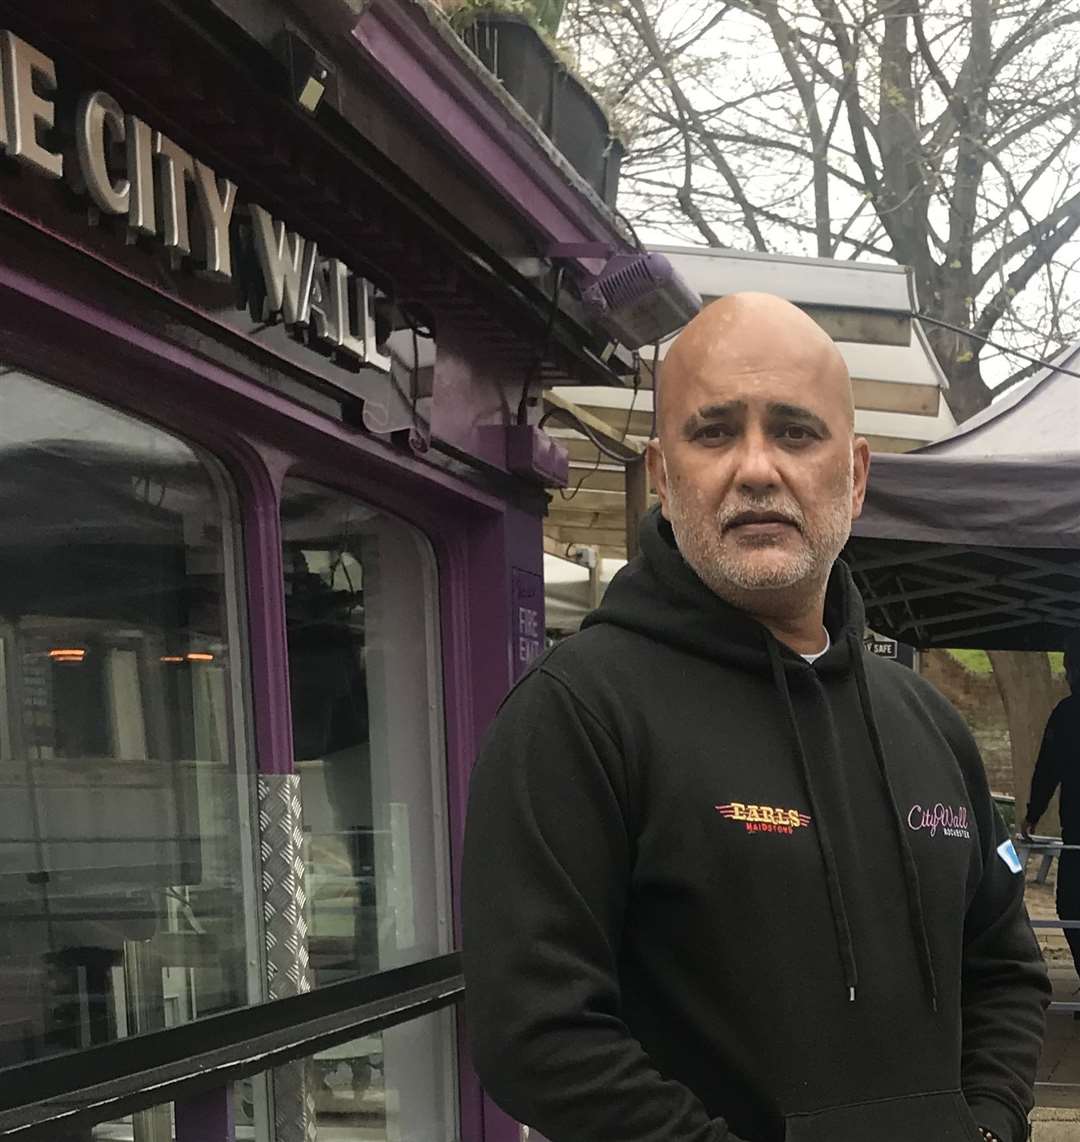 Sanjay Raval outside City Wall Wine Bar